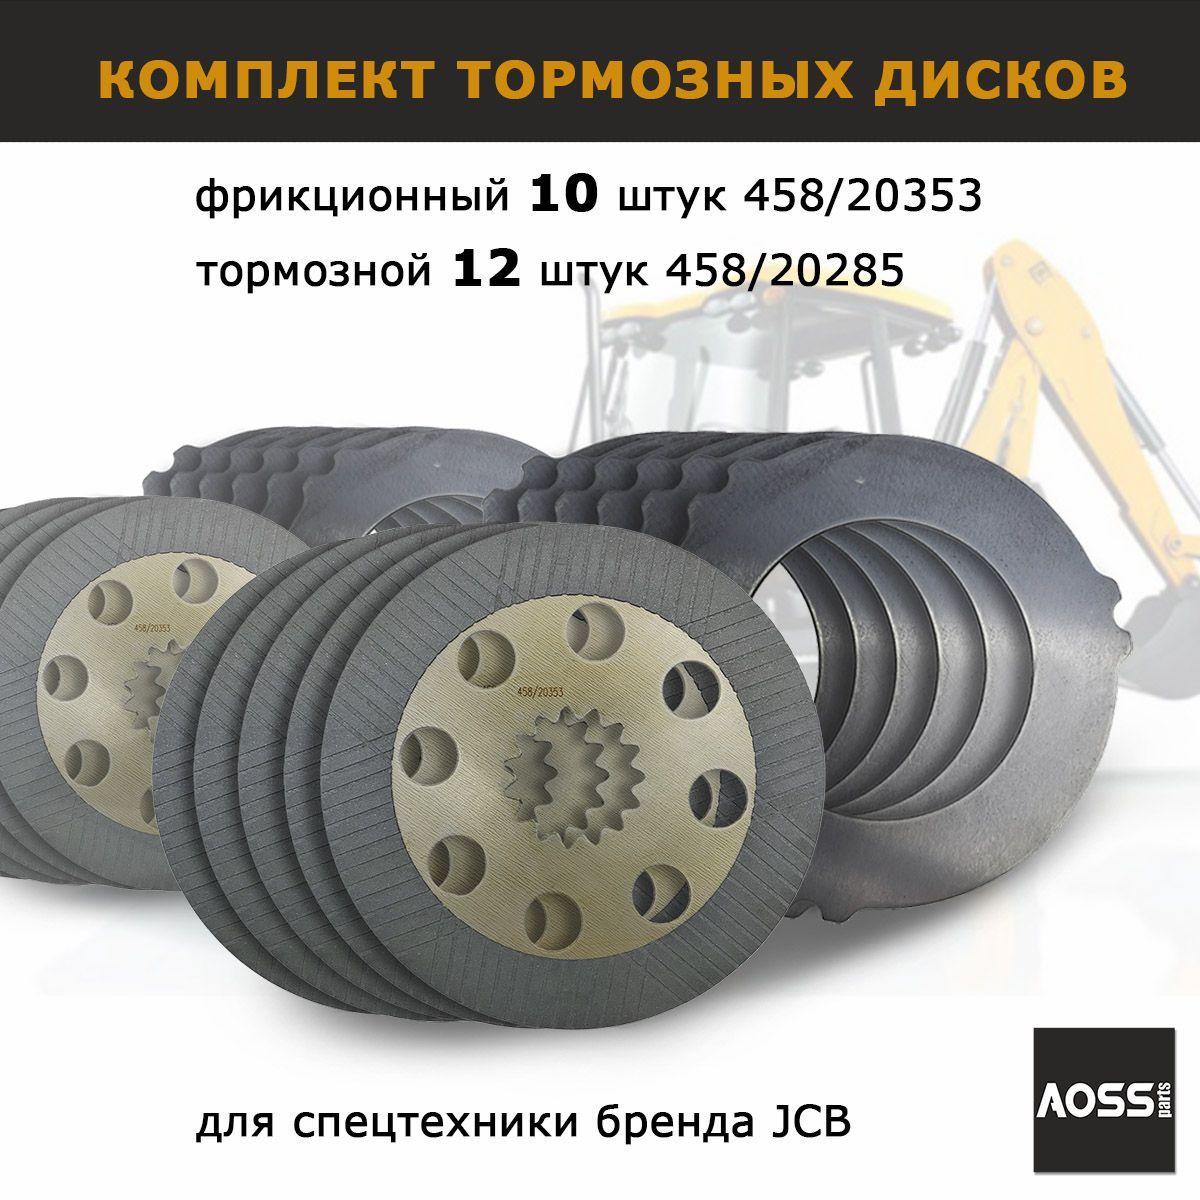 Тормозная система JCB 4cx. 458/20285. AOSS Parts.